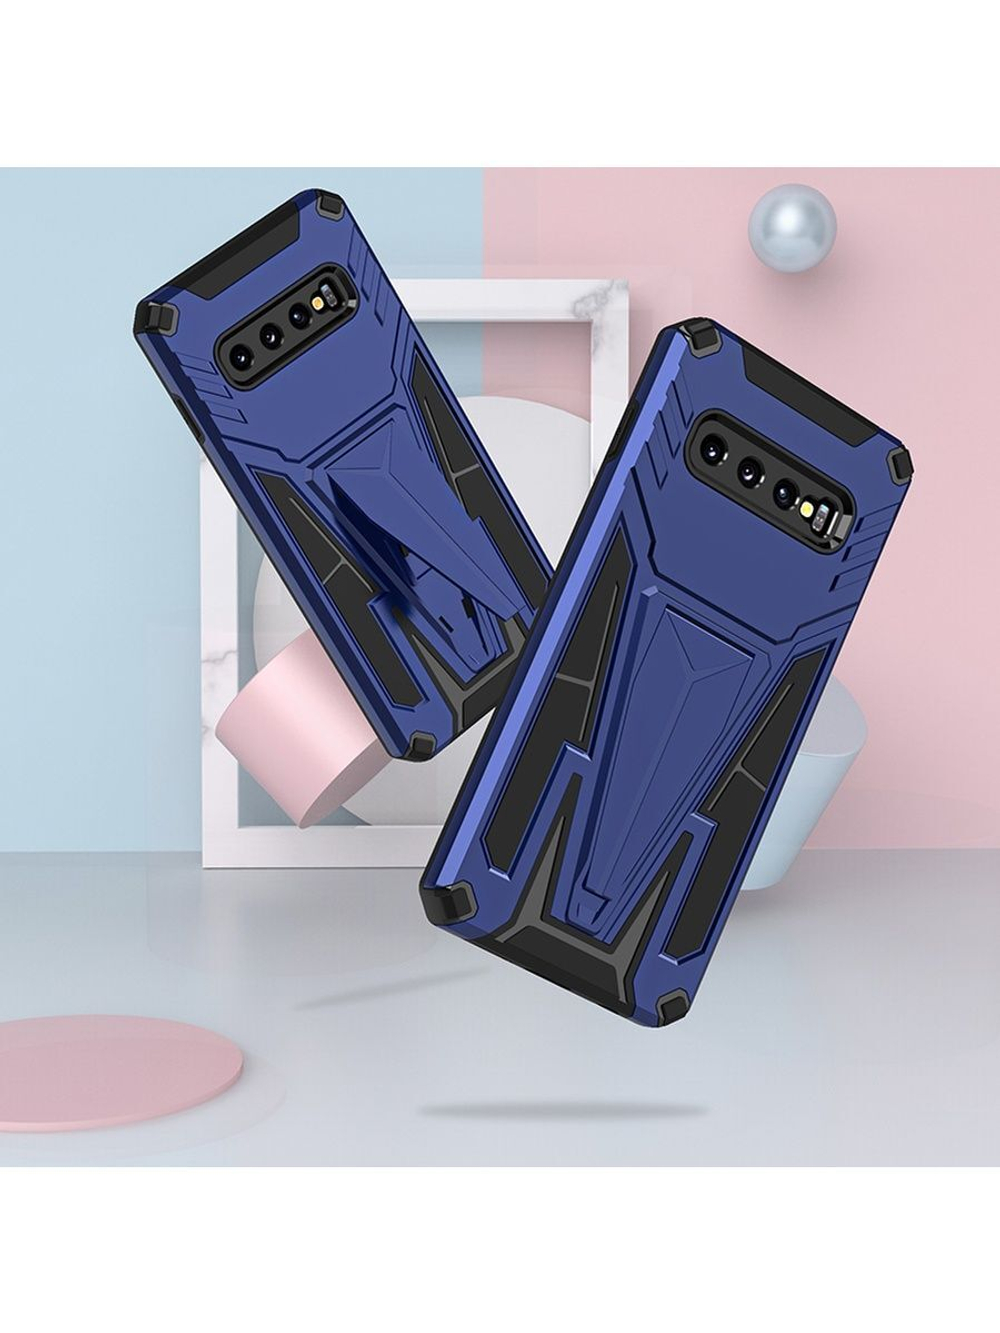 Чехол Rack Case для Samsung Galaxy S10 Plus